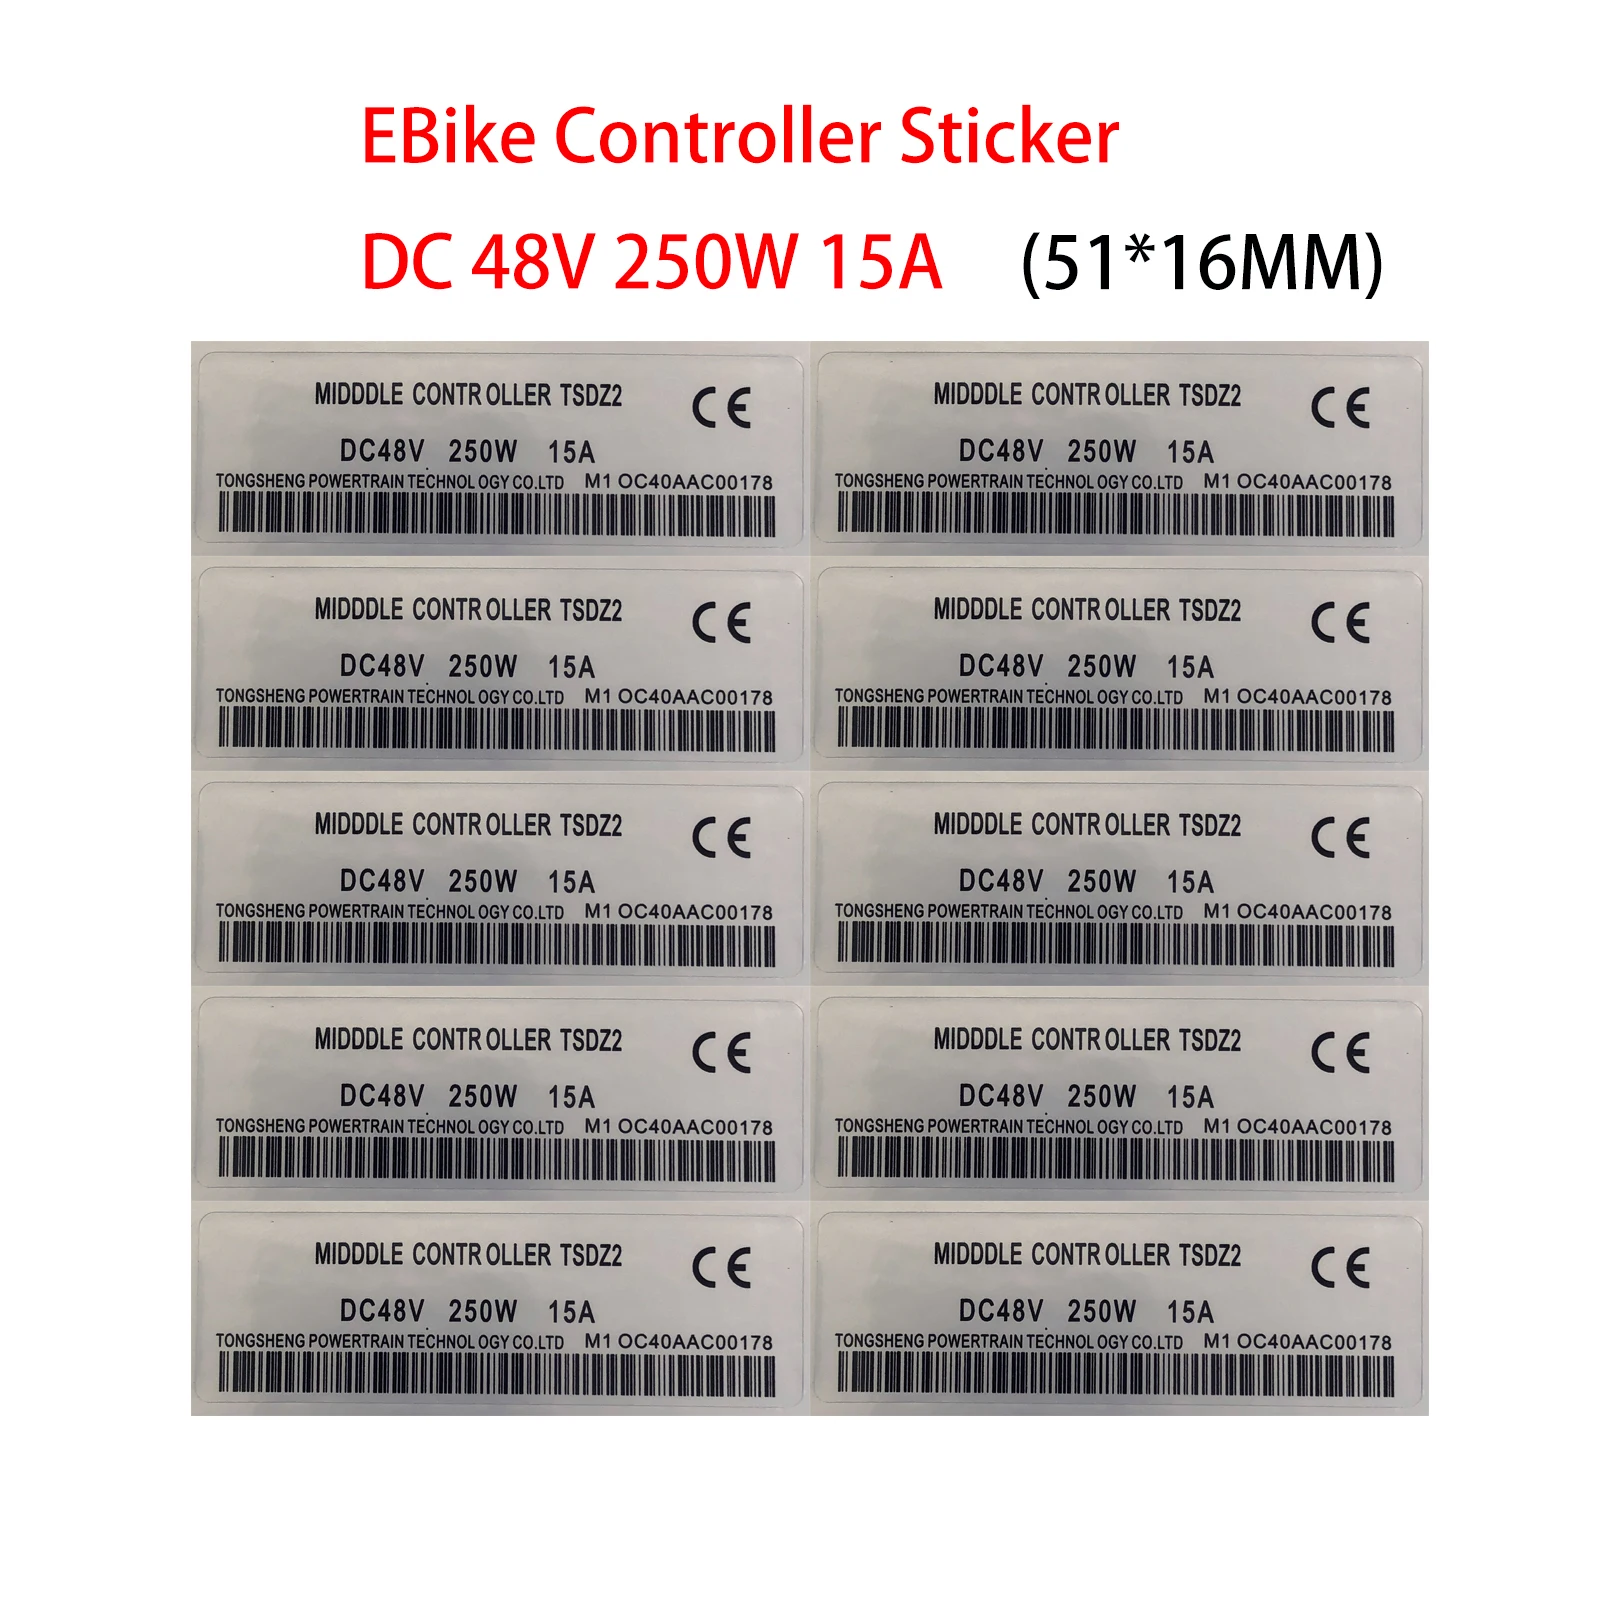 2x eBike sticker decal 250W 'road legal' for Tongsheng TSDZ2 48V electric motor 